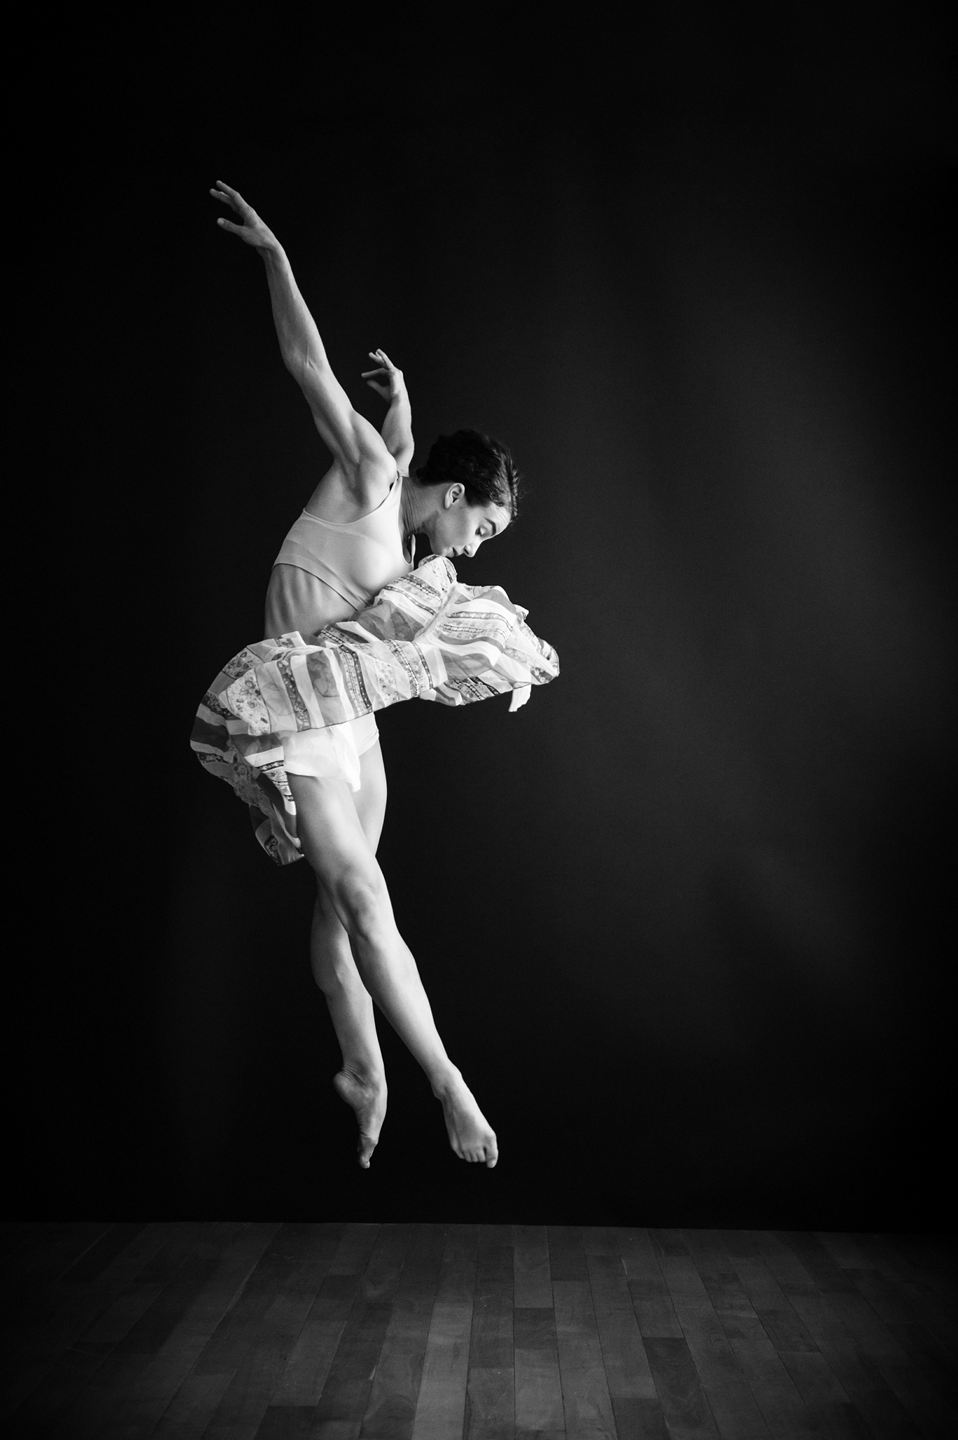 Los Angeles Dance Portrait Photo - Olga Sokolova - by Tommy Xing Photography 24.JPG